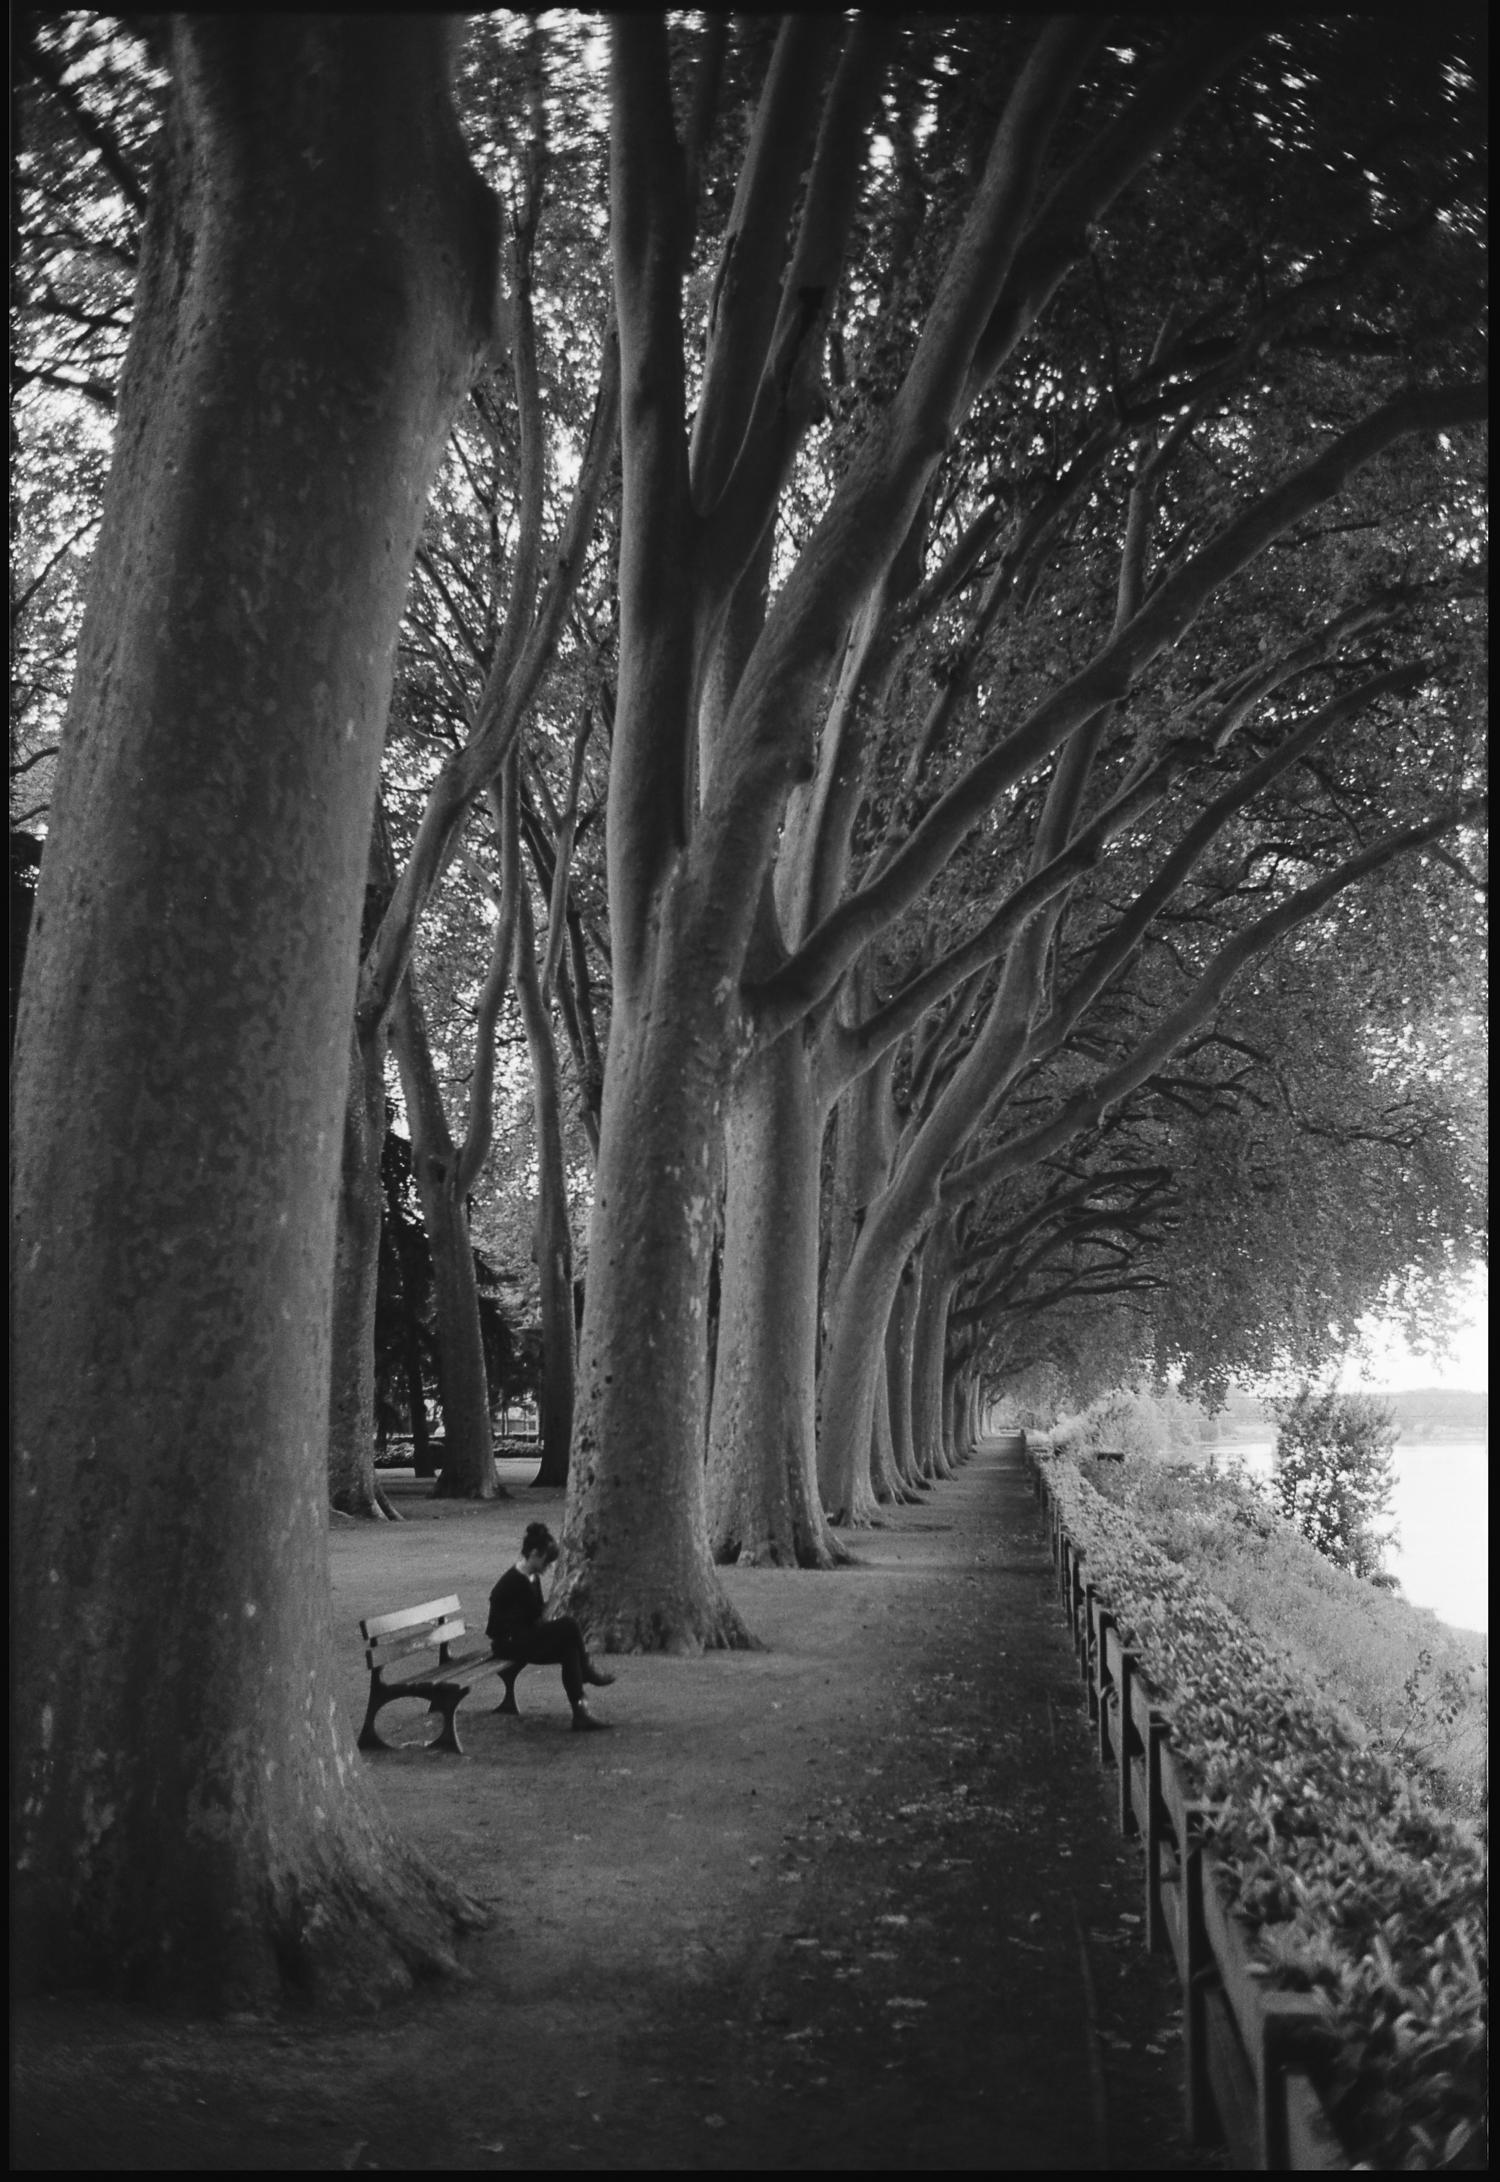 Paul Cooklin Black and White Photograph - Edition 2/10 Treeline, Chinon, France, Photograph, Silver Hal/Gelatin